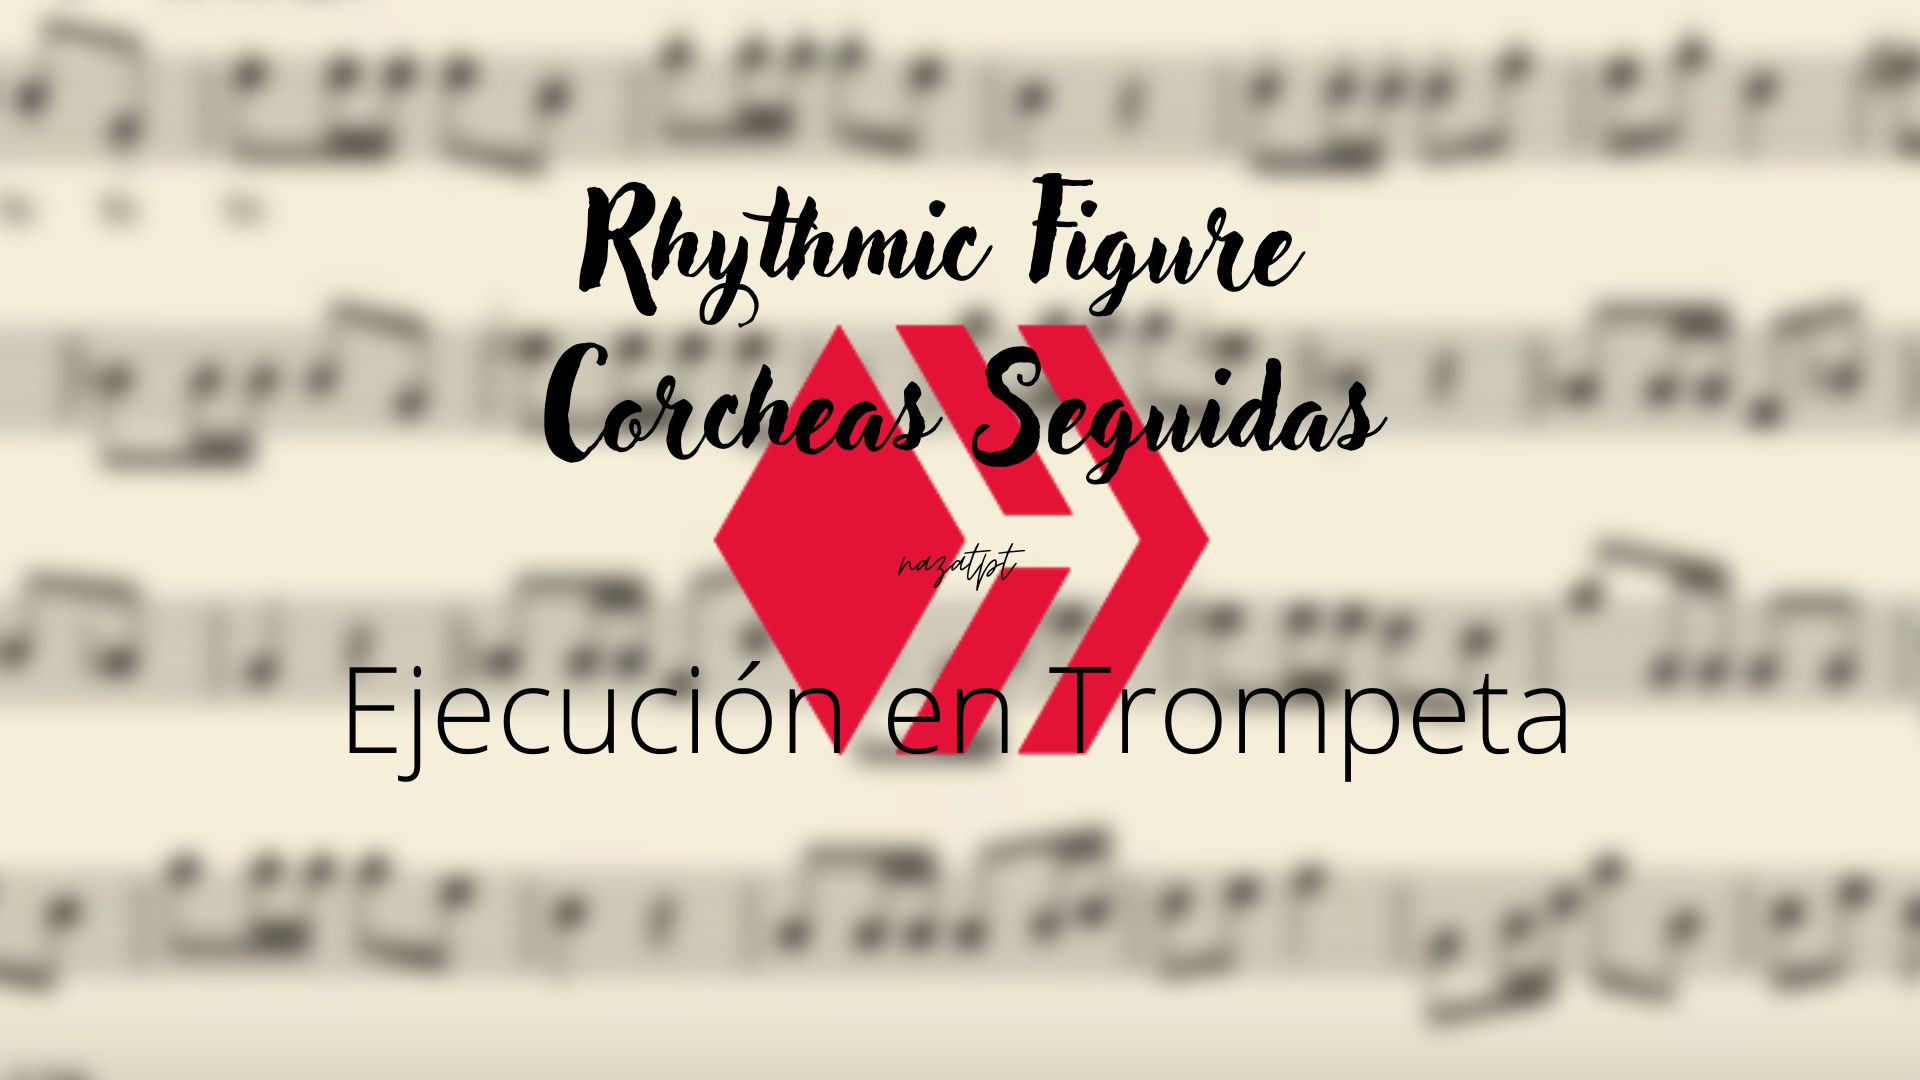 Rhythmic Figure Corcheas Seguidas.jpg